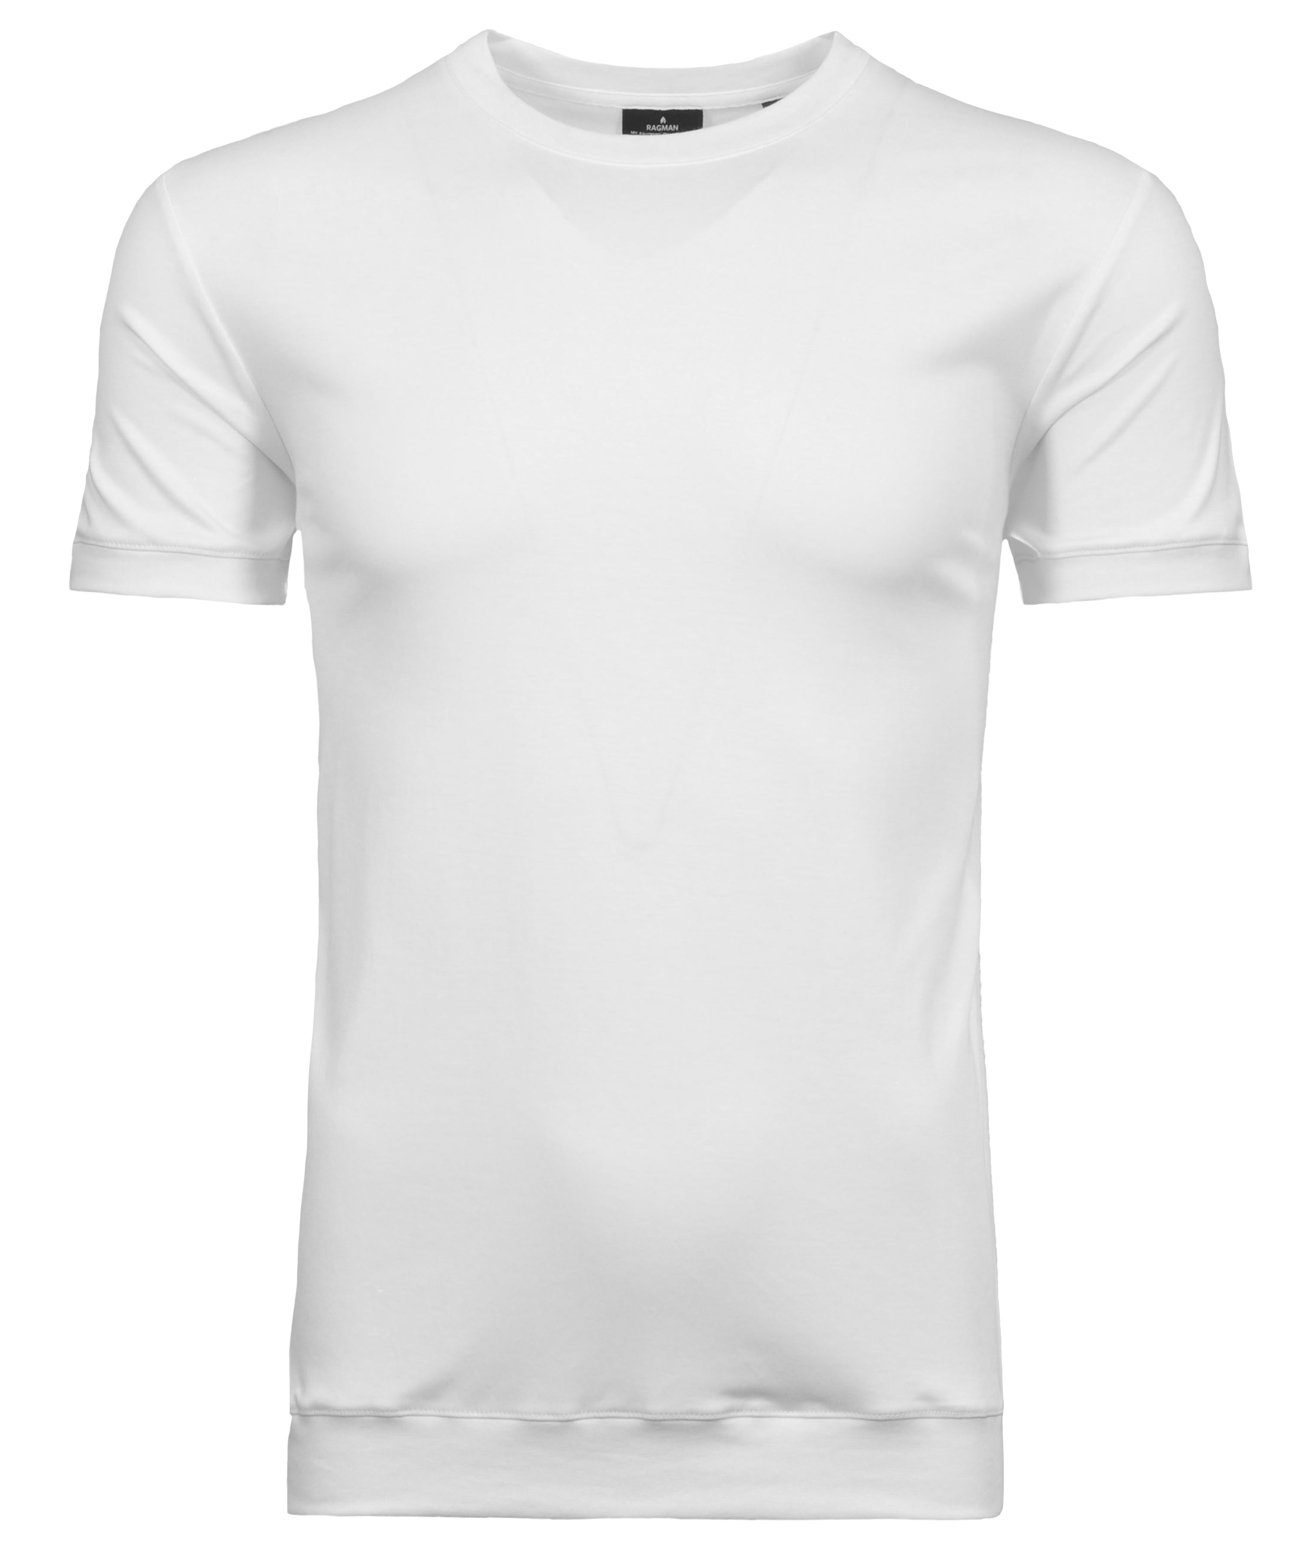 RAGMAN T-Shirt Weiss | T-Shirts